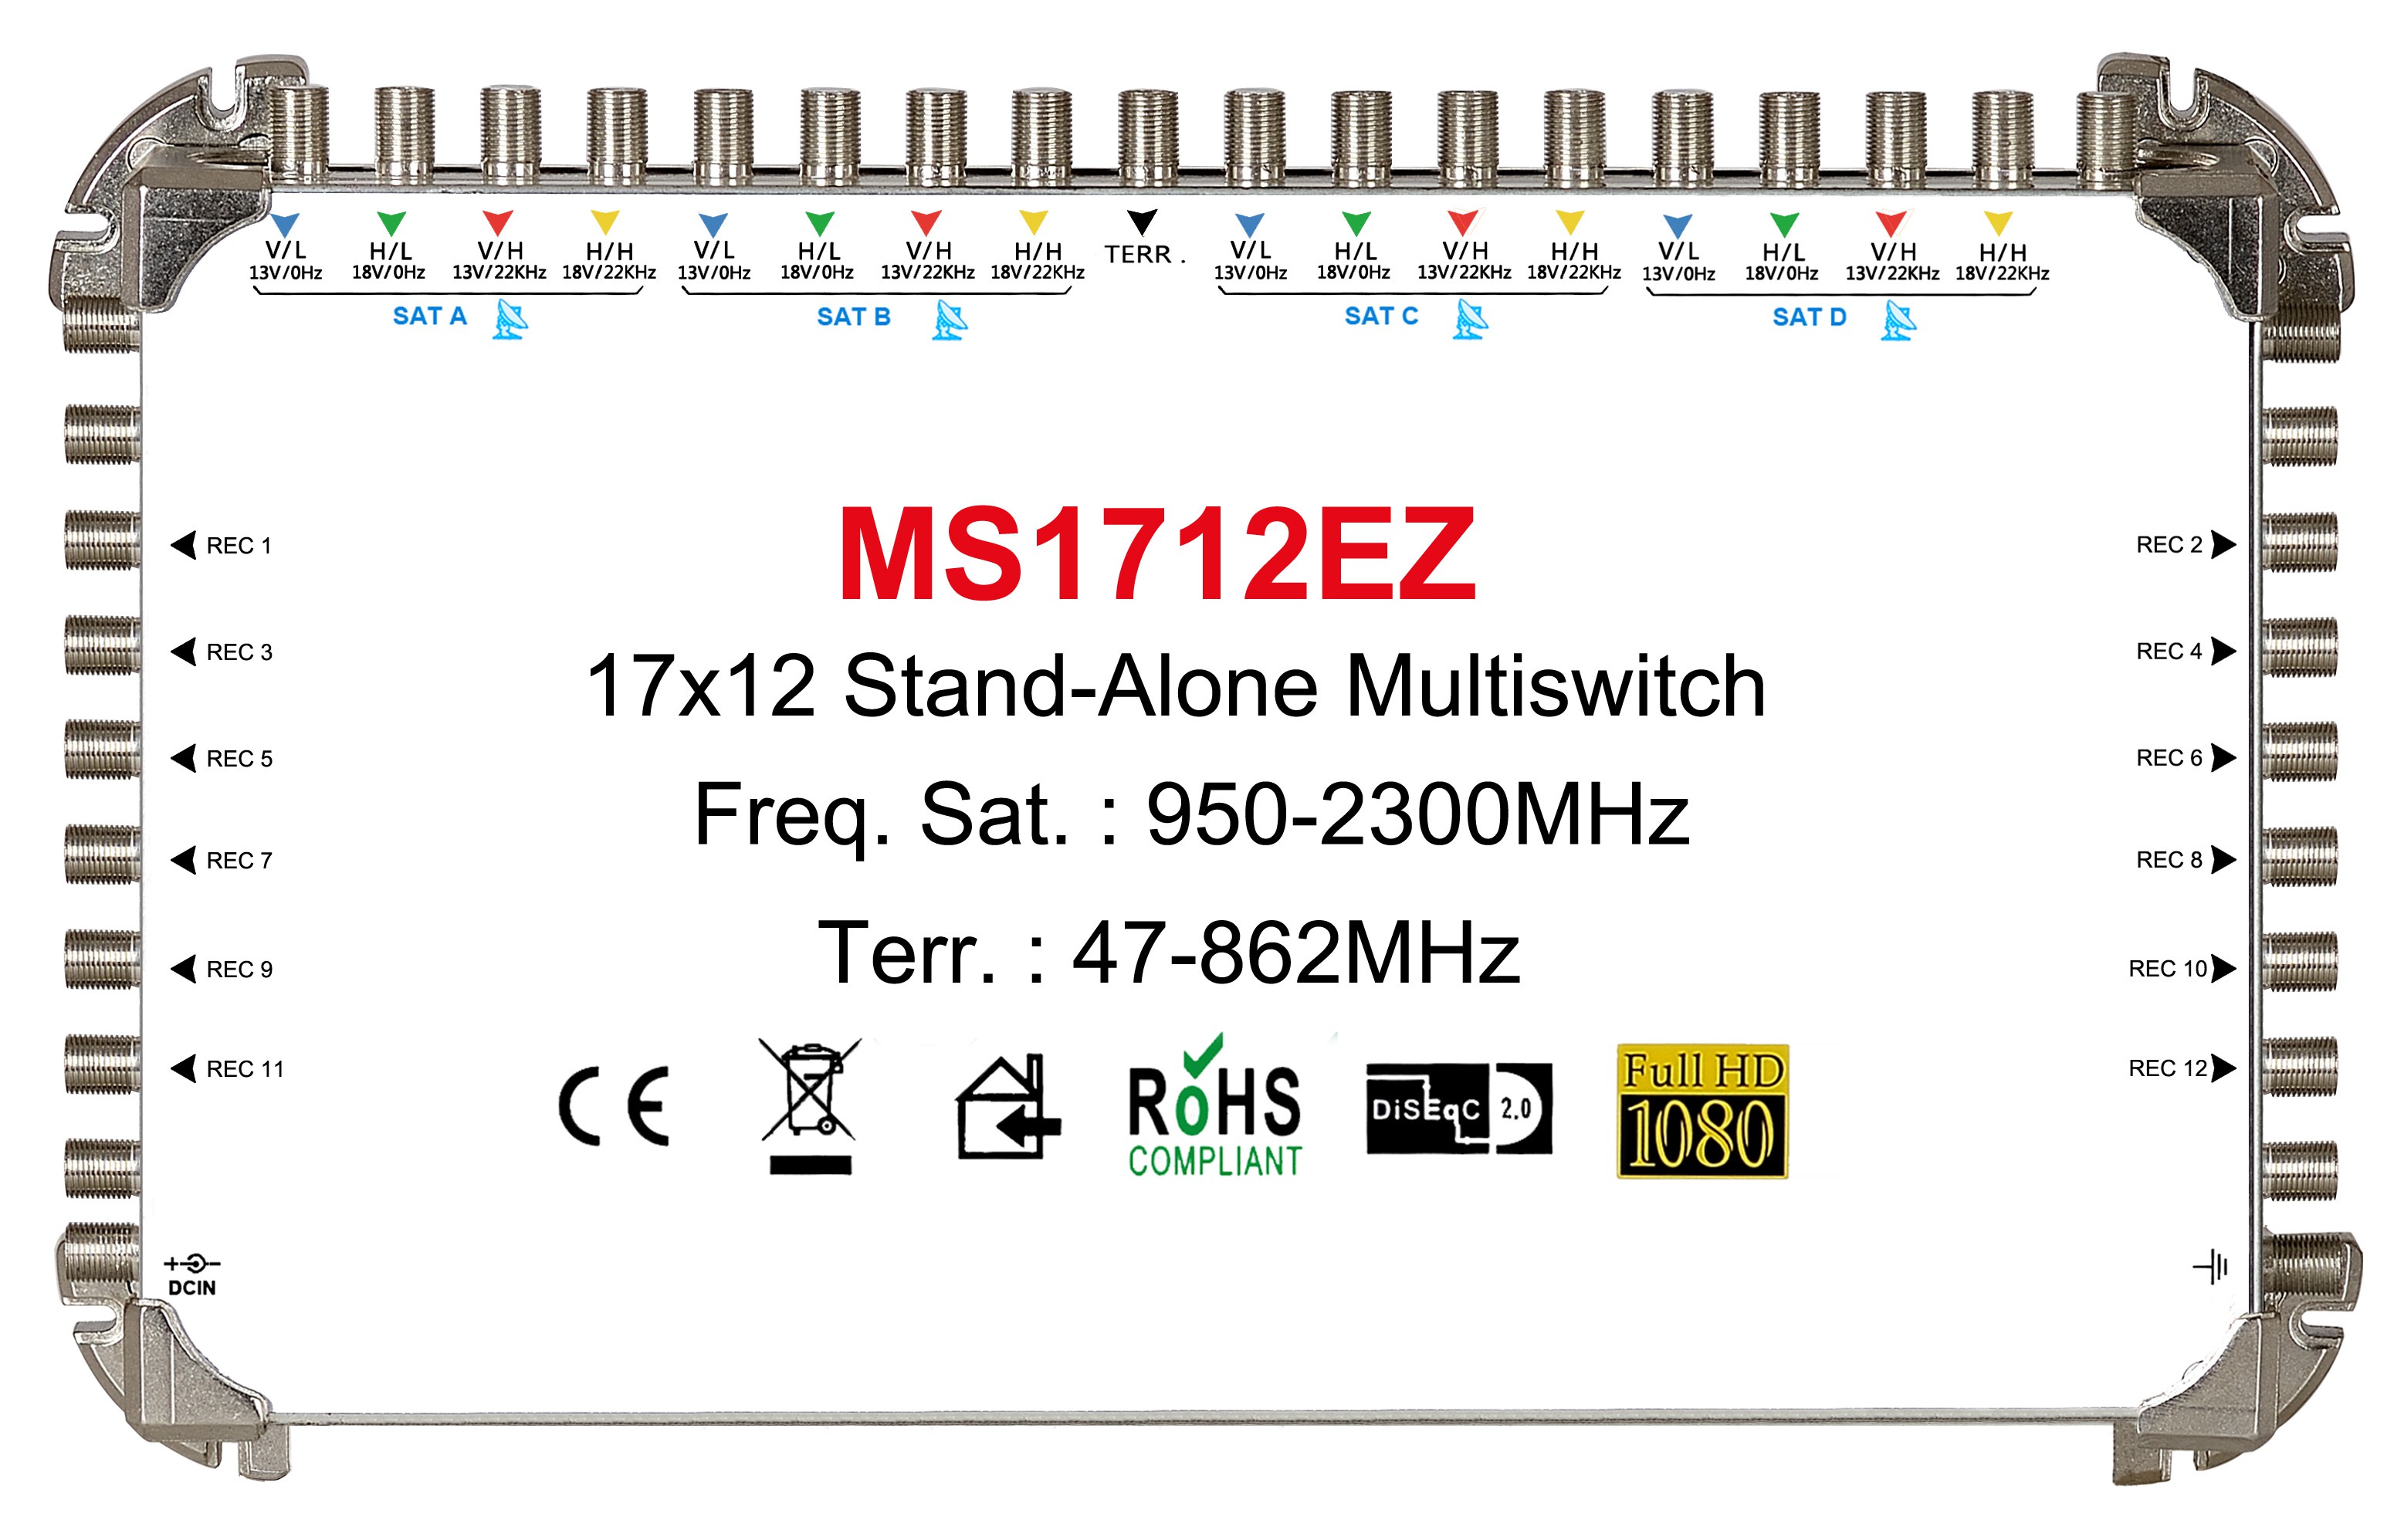 17x12 satélite multi-switch, stand-alone multiswitch